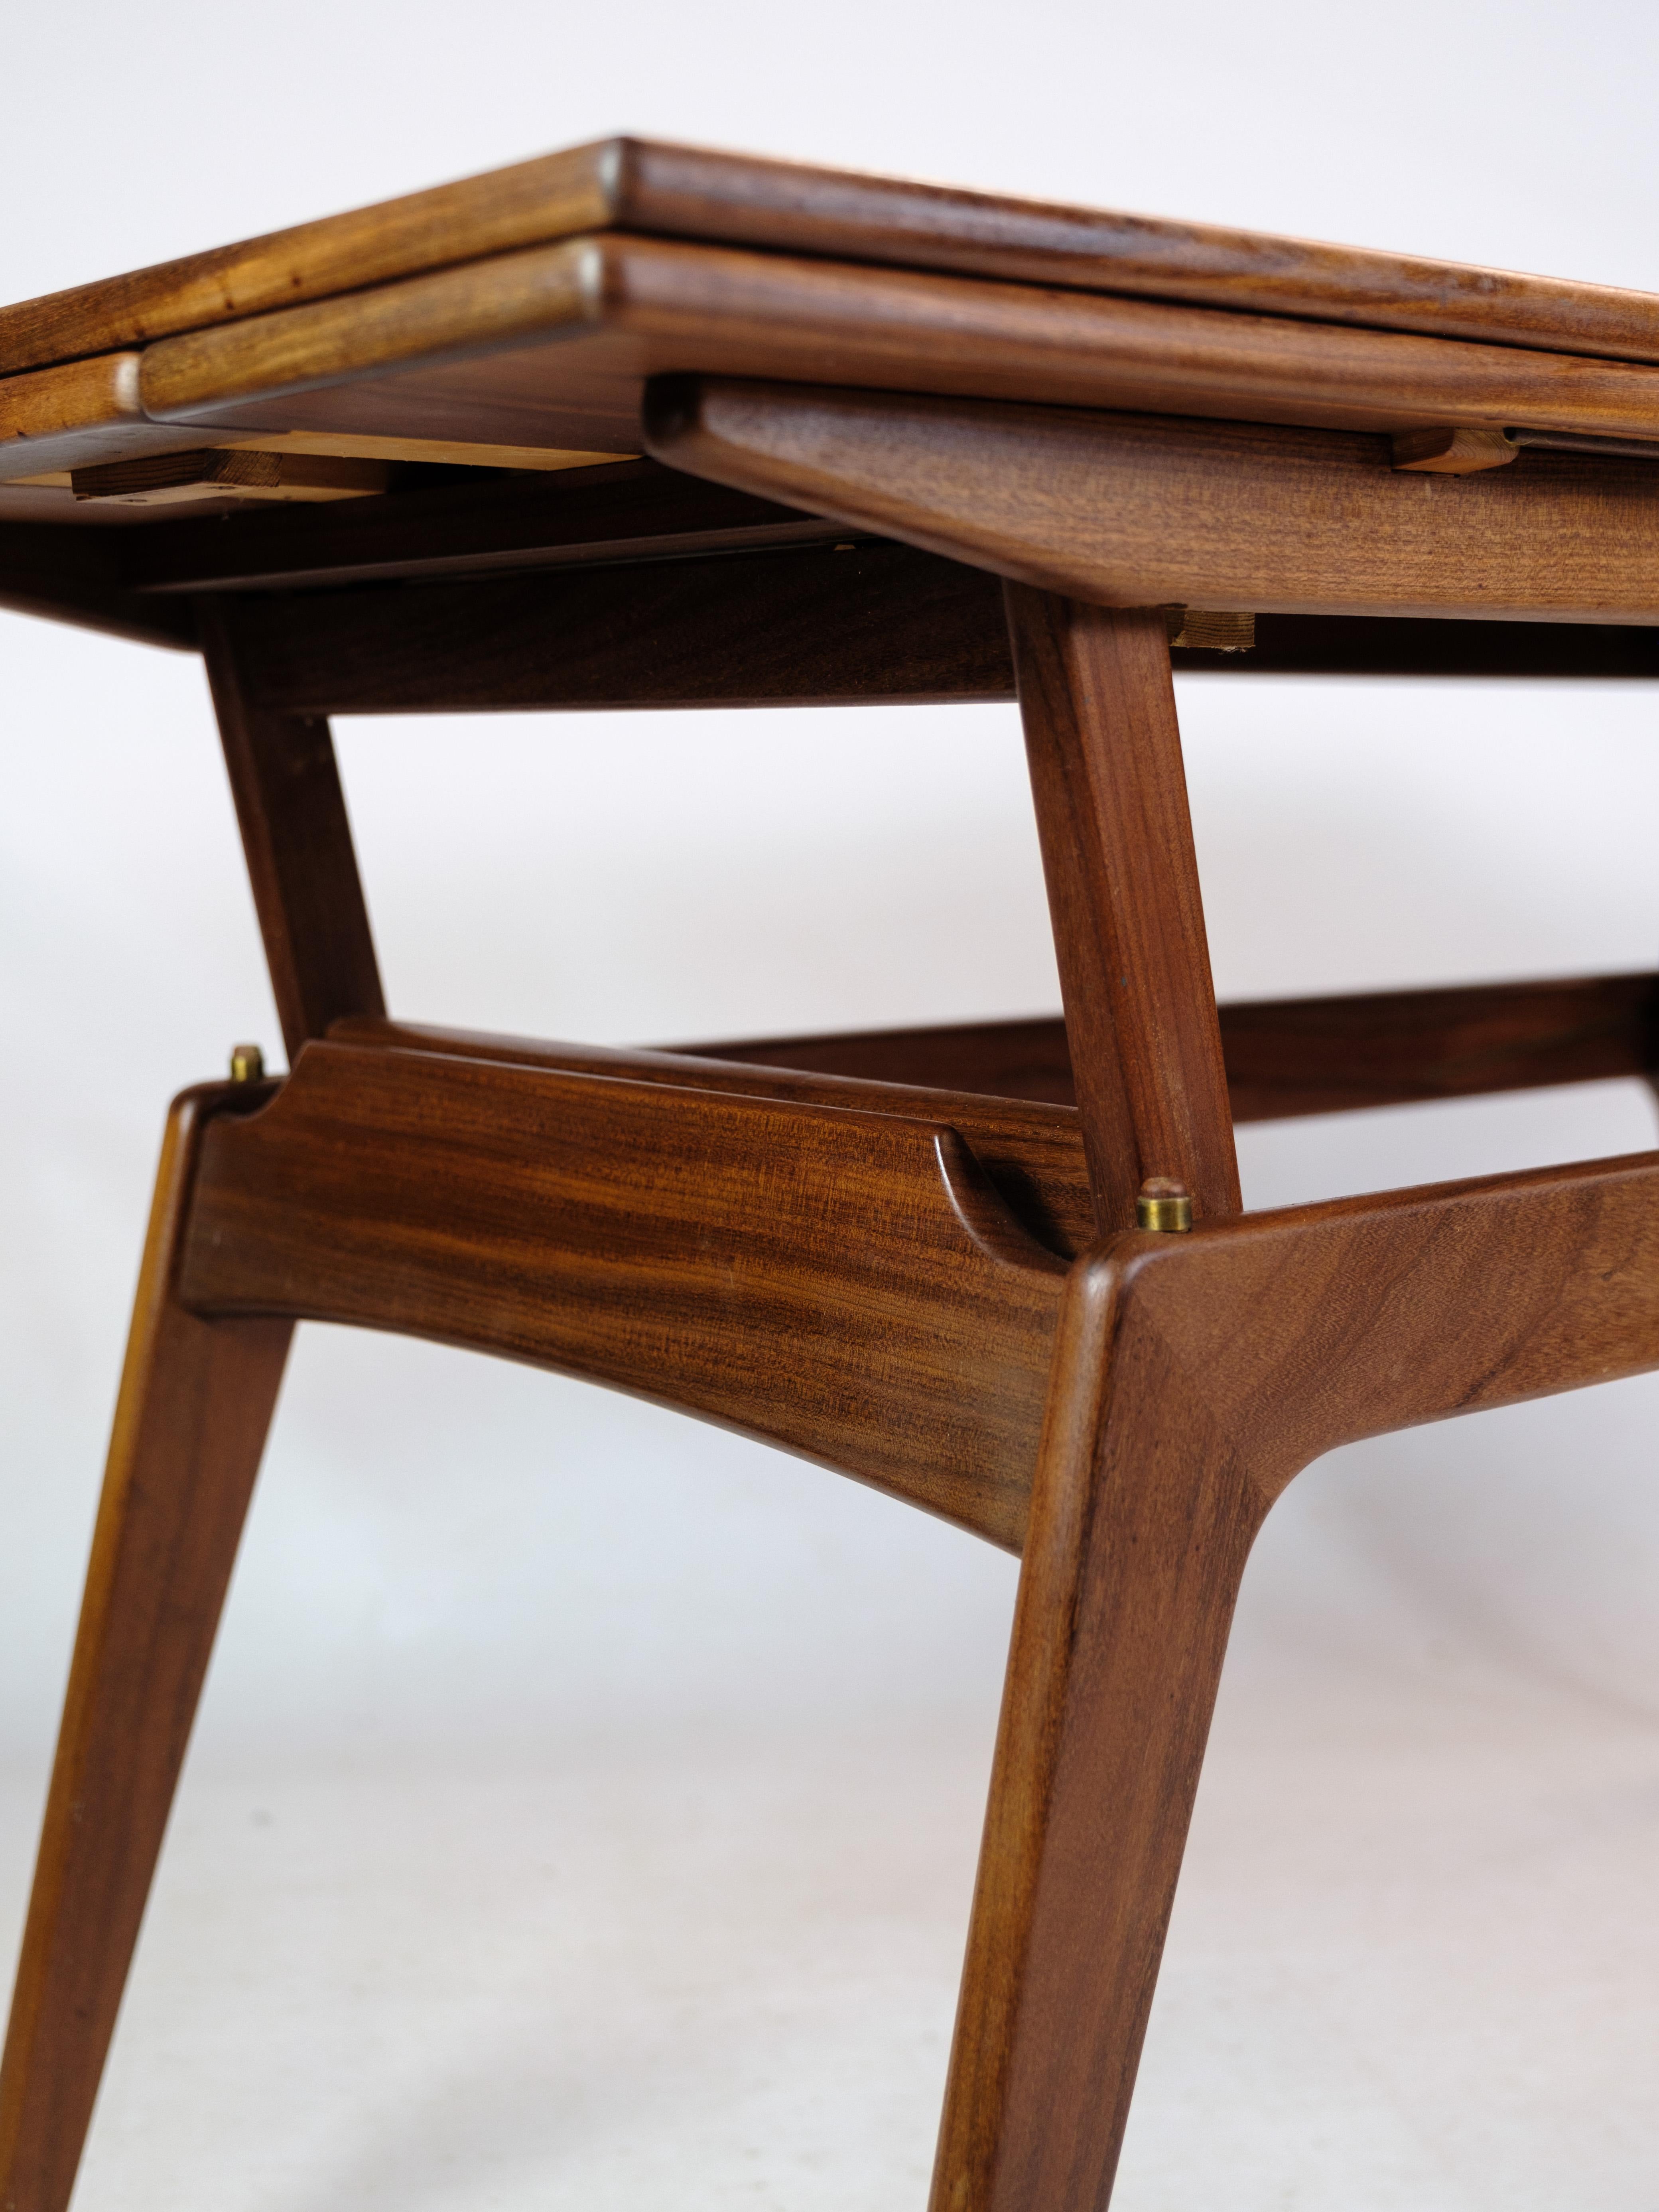 Coffee Table / Dining Table, Teak Wood, Copenhagen Table, Danish Furniture Manuf For Sale 6